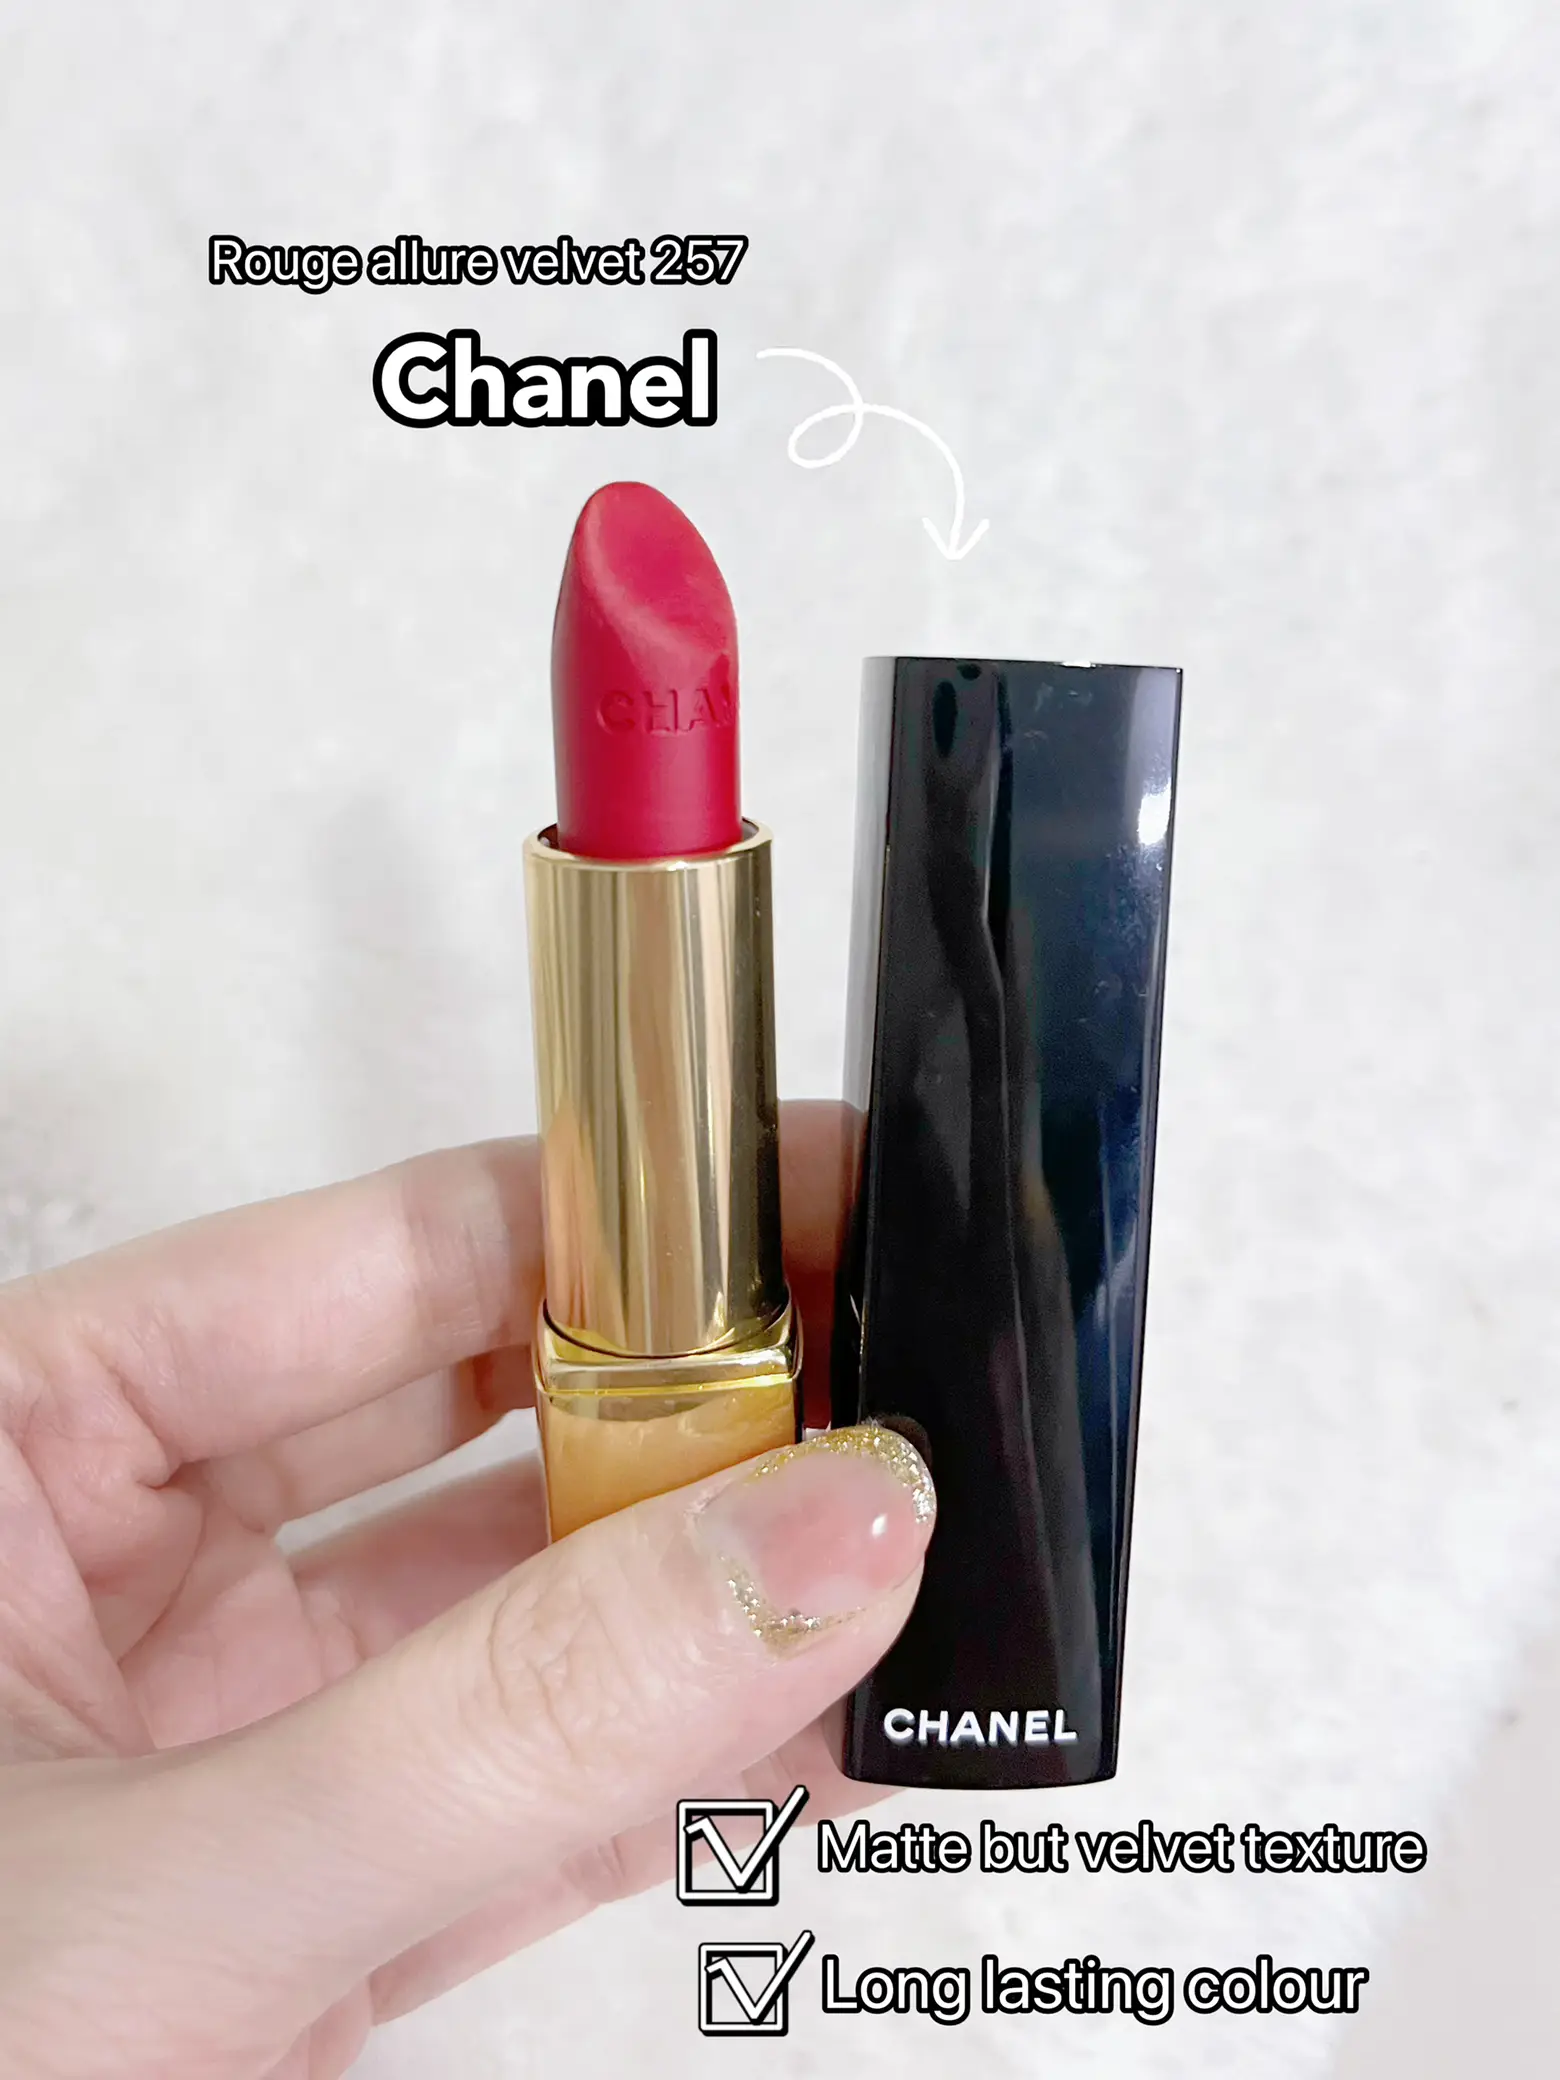 257 chanel lipstick